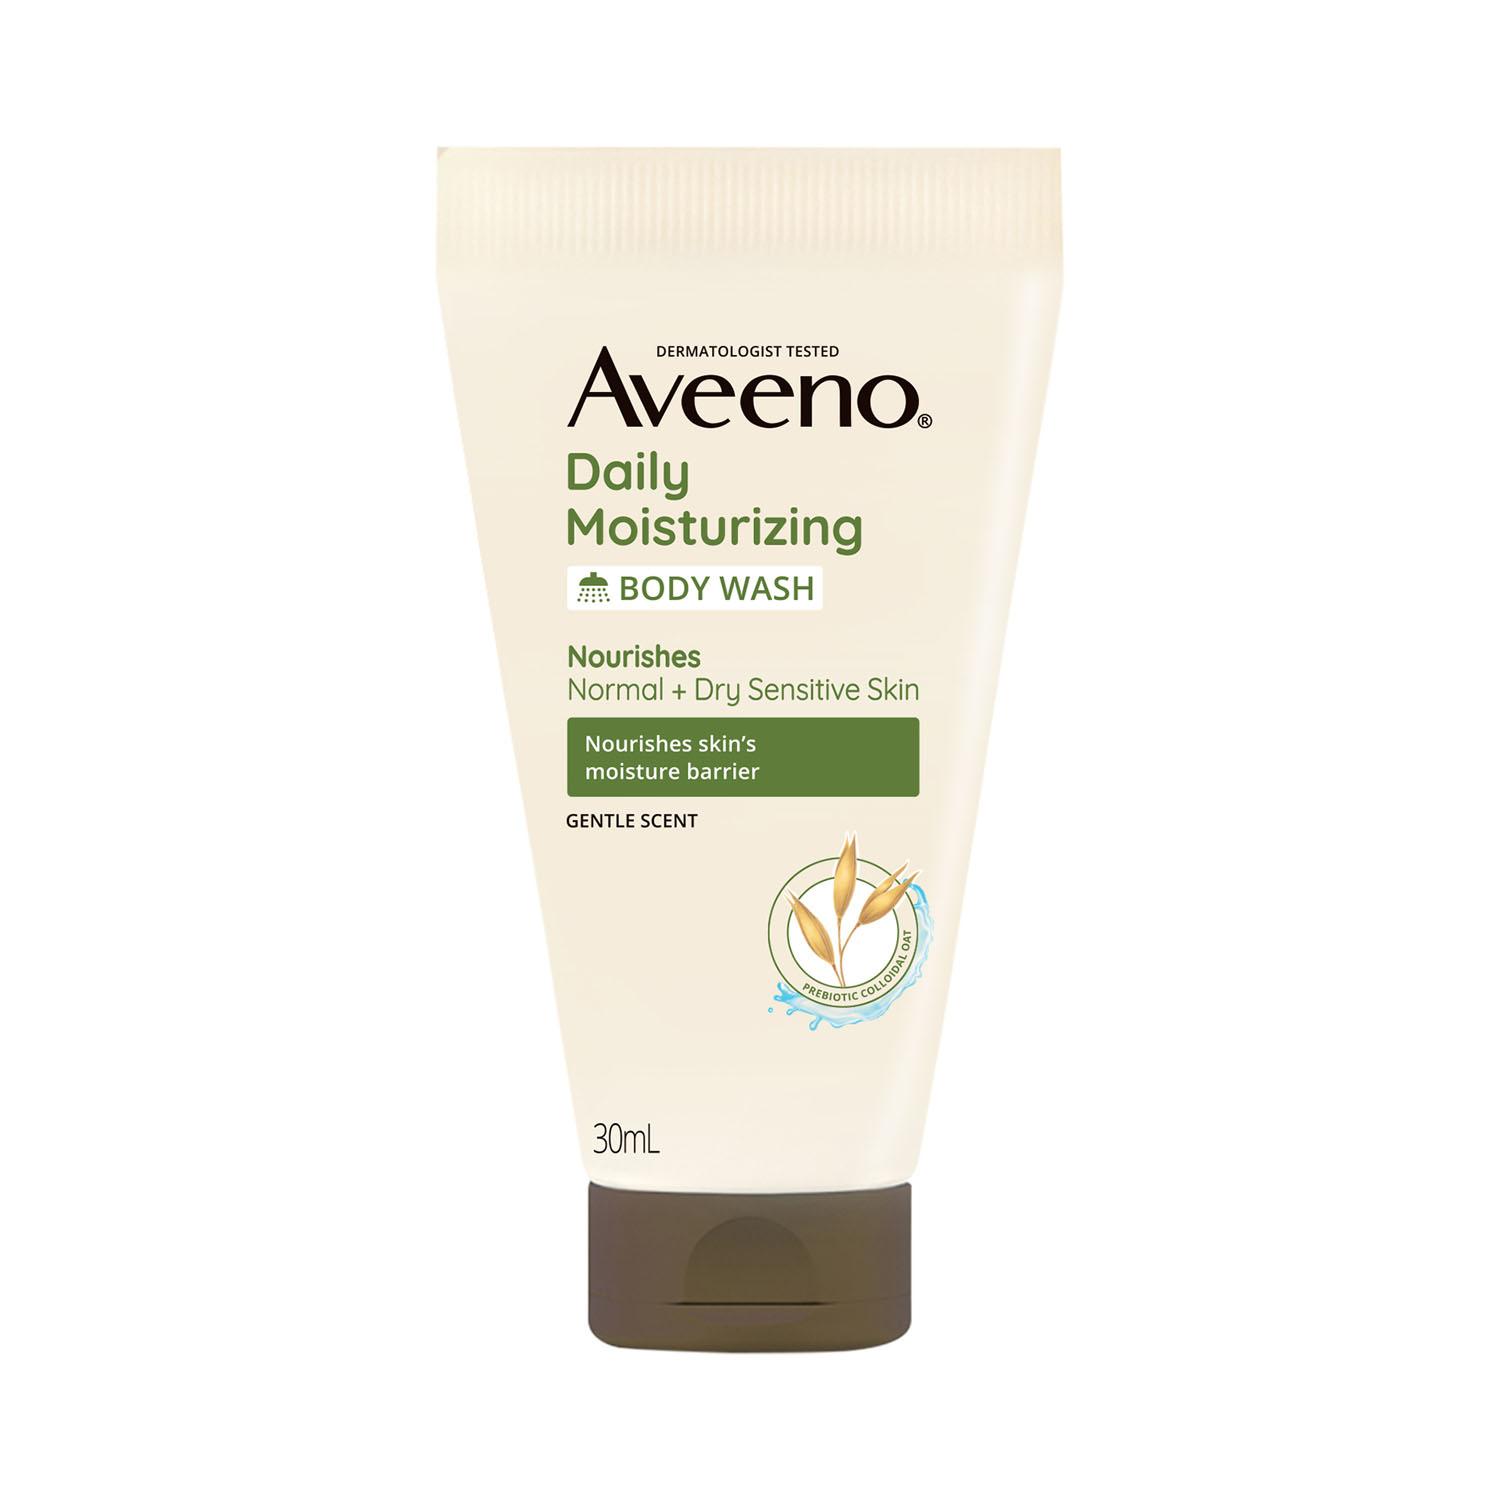 Aveeno Daily Moisturizing Body Wash (30ml)